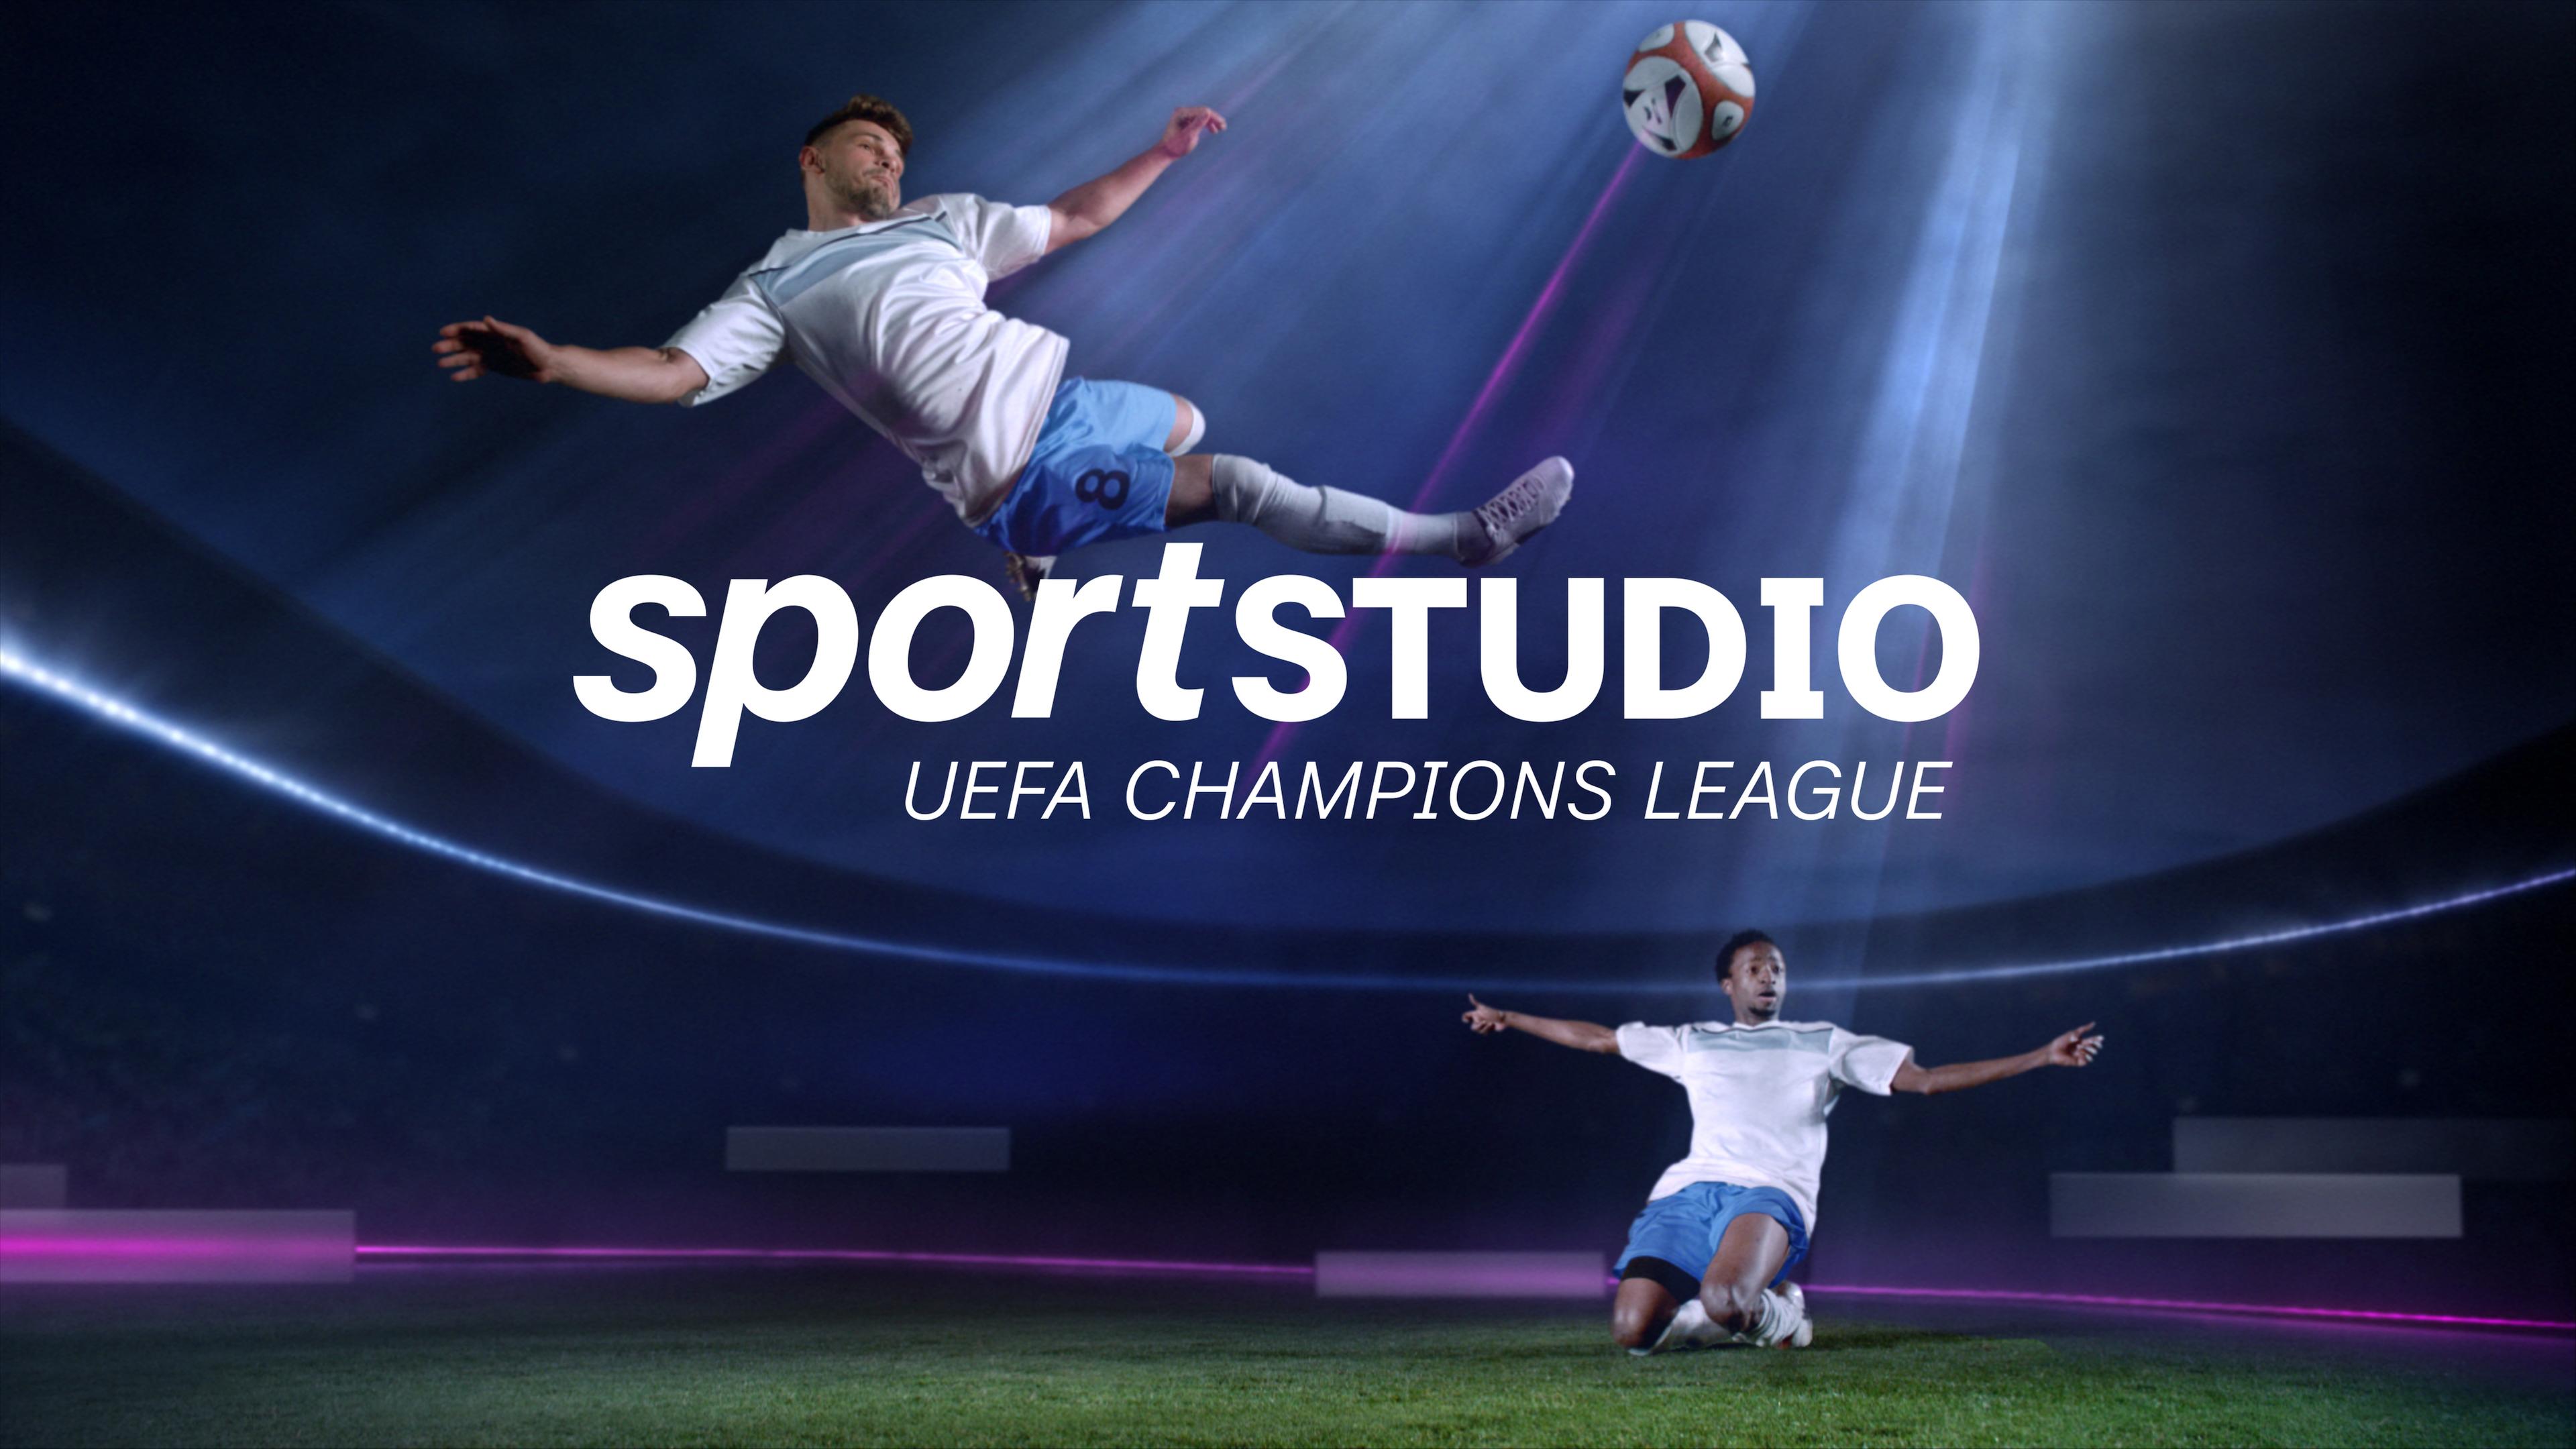 Logo "sportstudio UEFA Champions League".